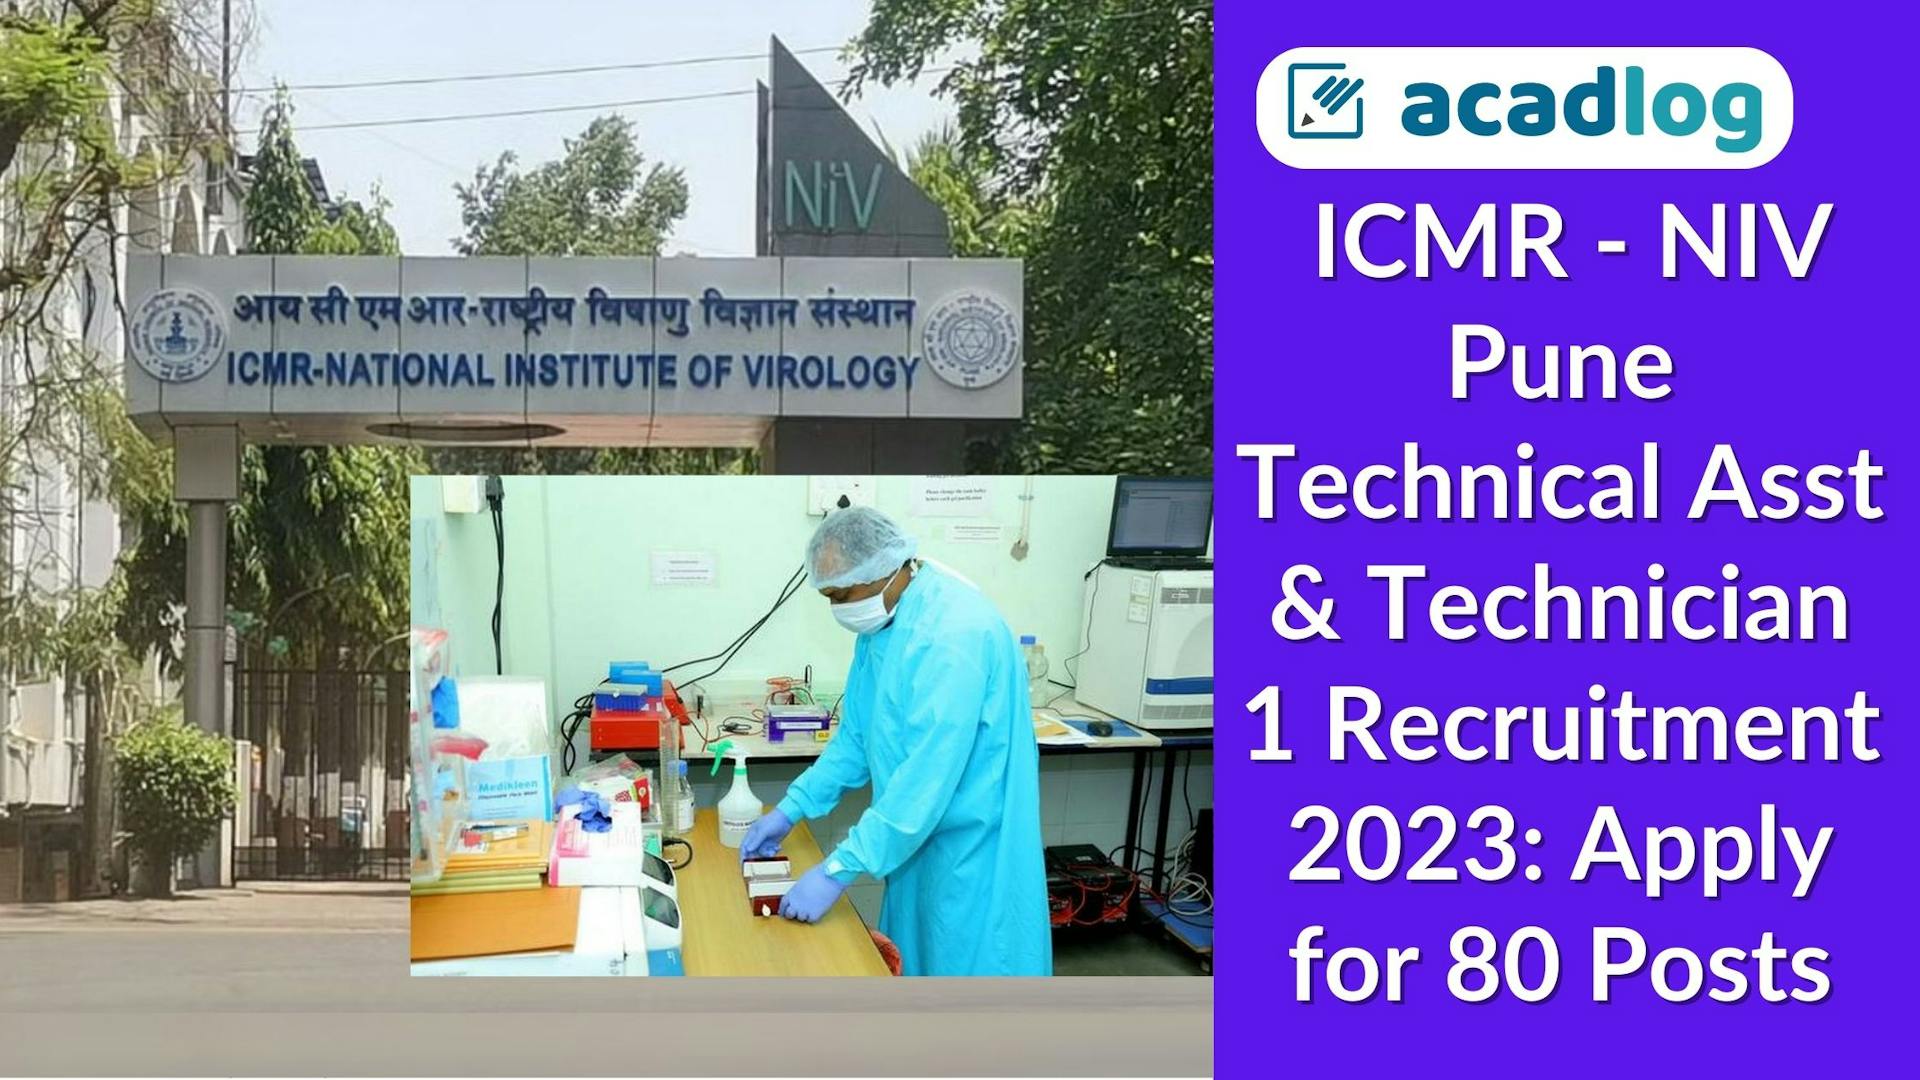  ICMR - NIV Pune Technical Asst & Technician 1 Recruitment 2023: Apply for 80 Posts